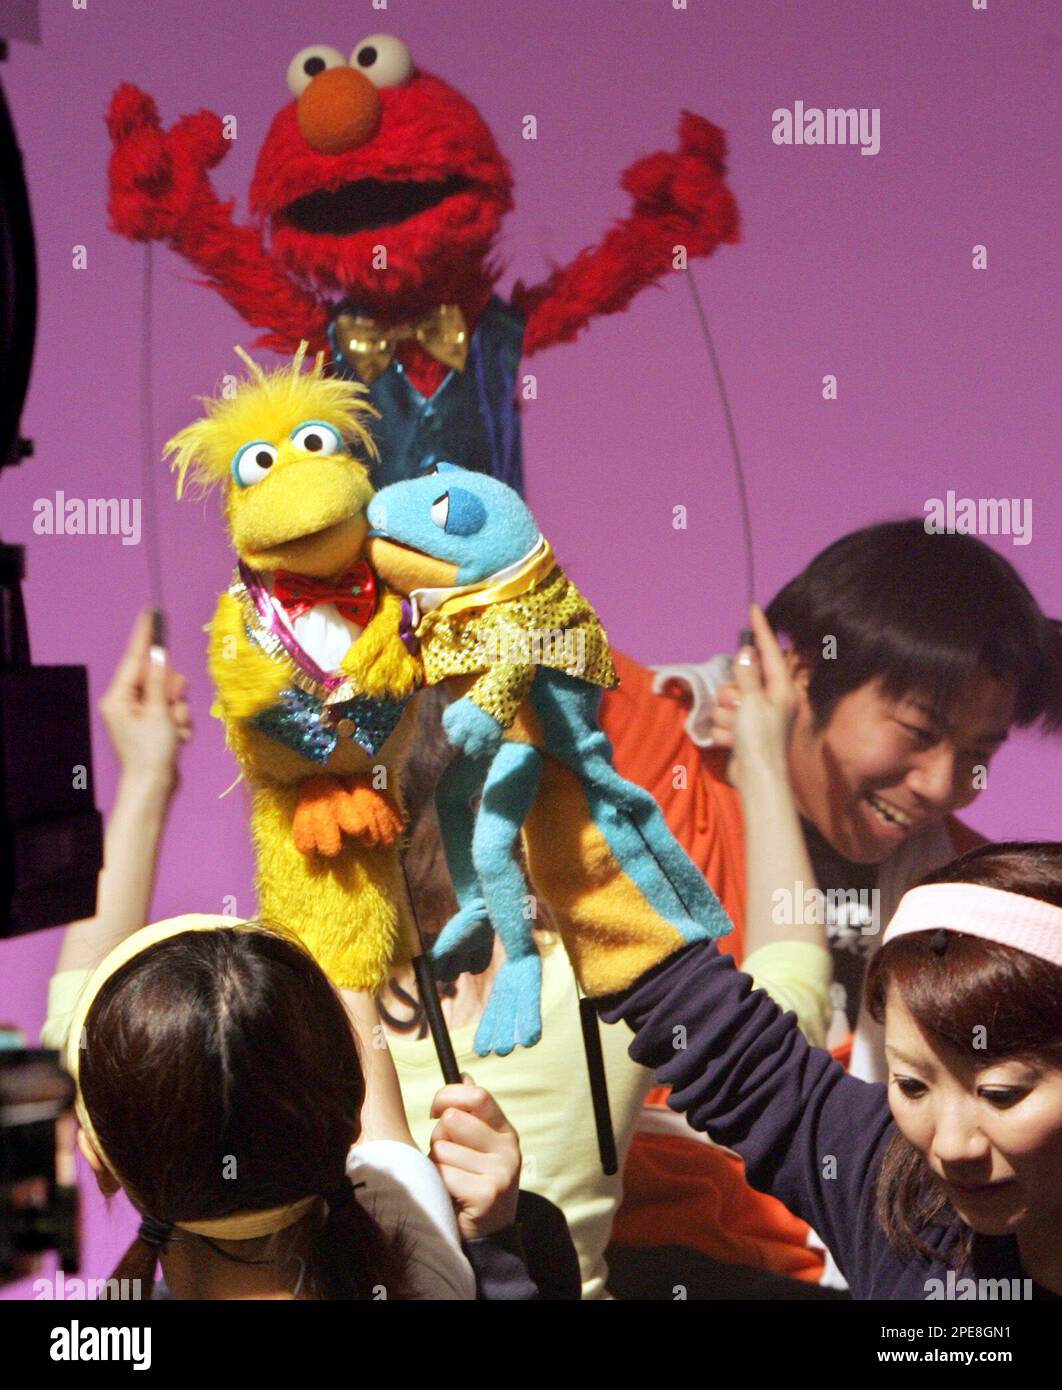 Muppet operators, handles Elmo, a popular Sesame Street character